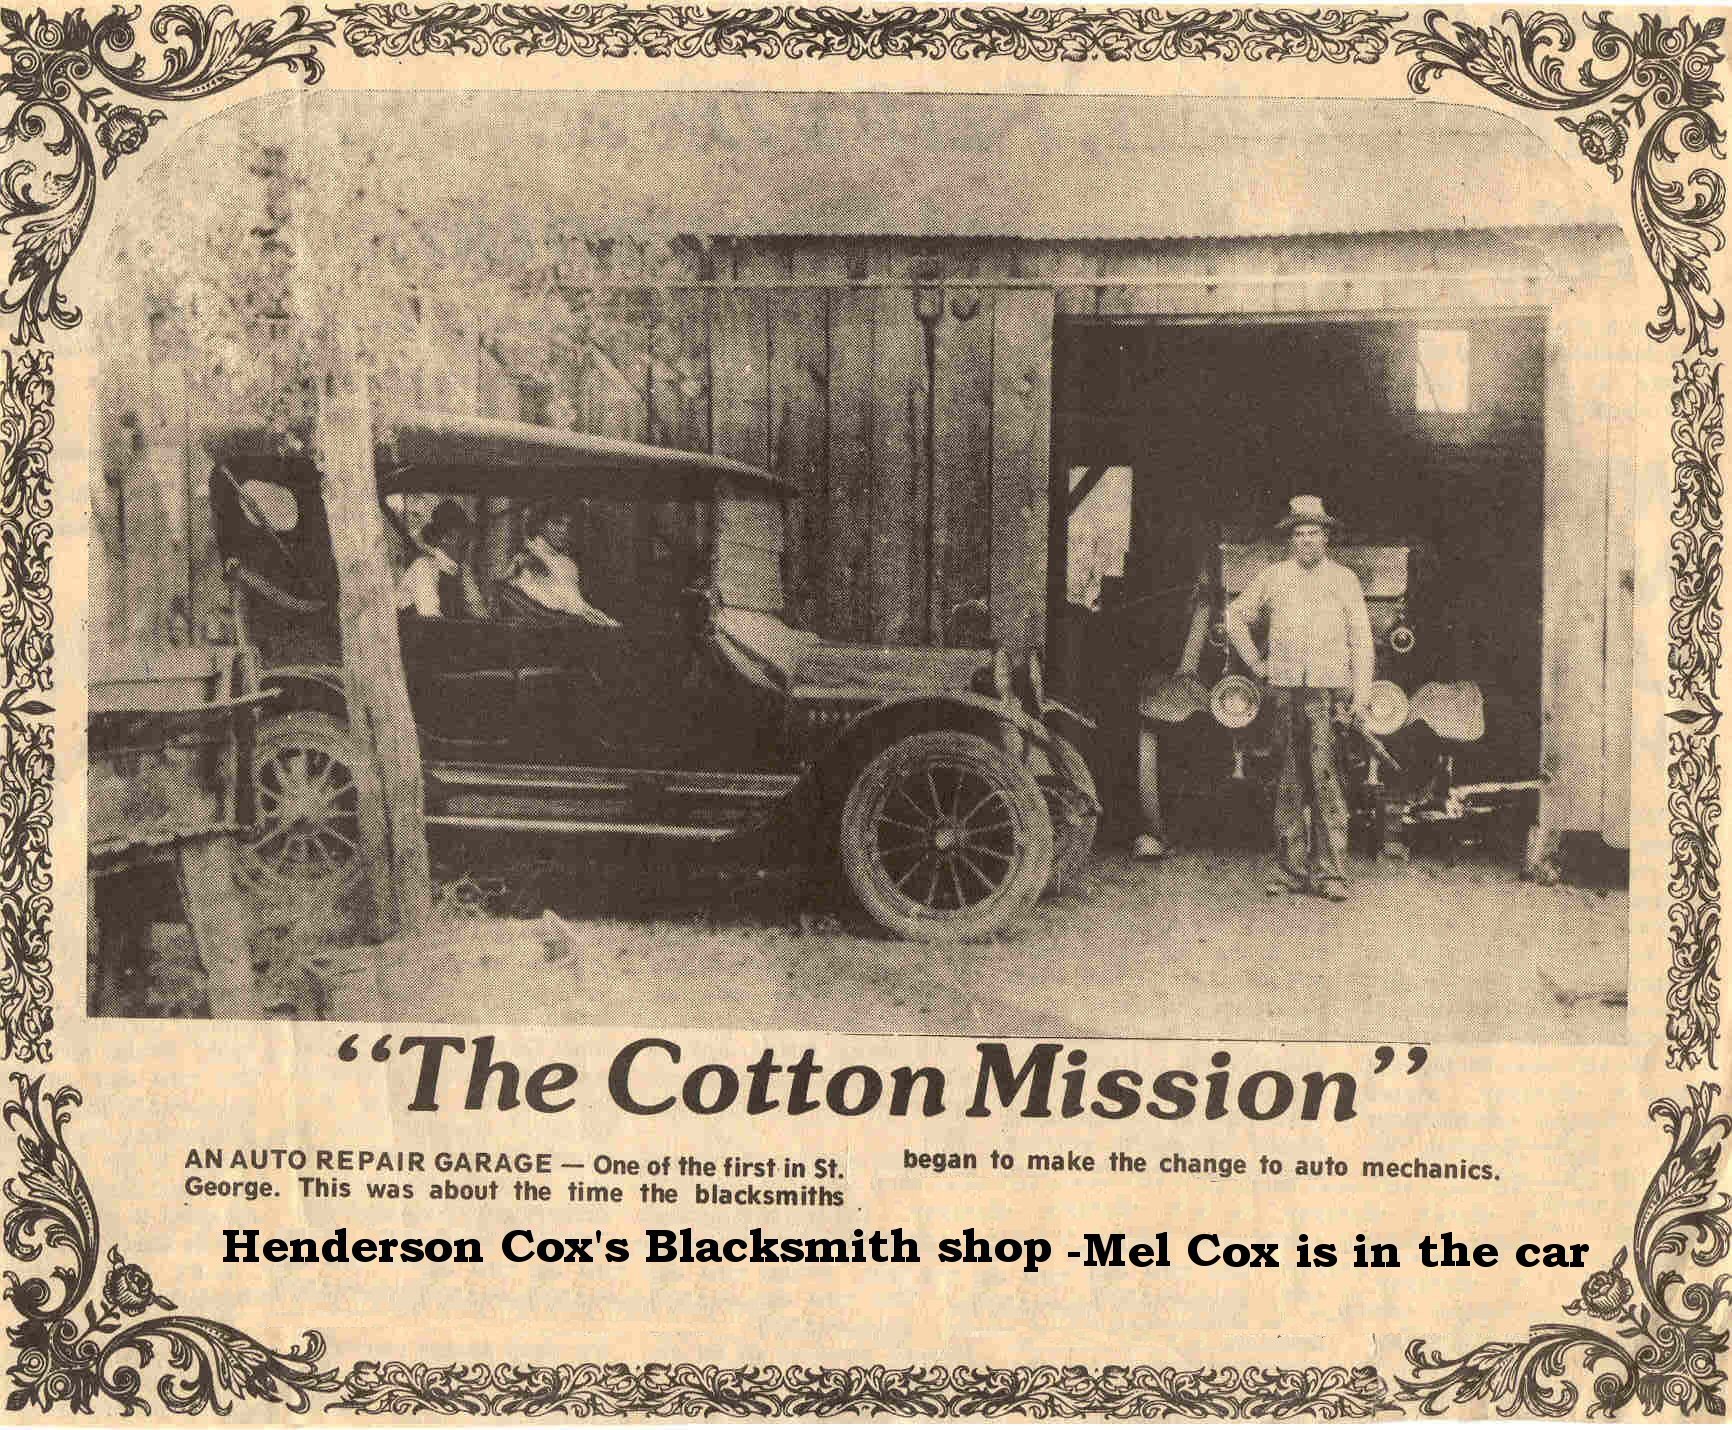 Henderson Cox's blacksmith shop